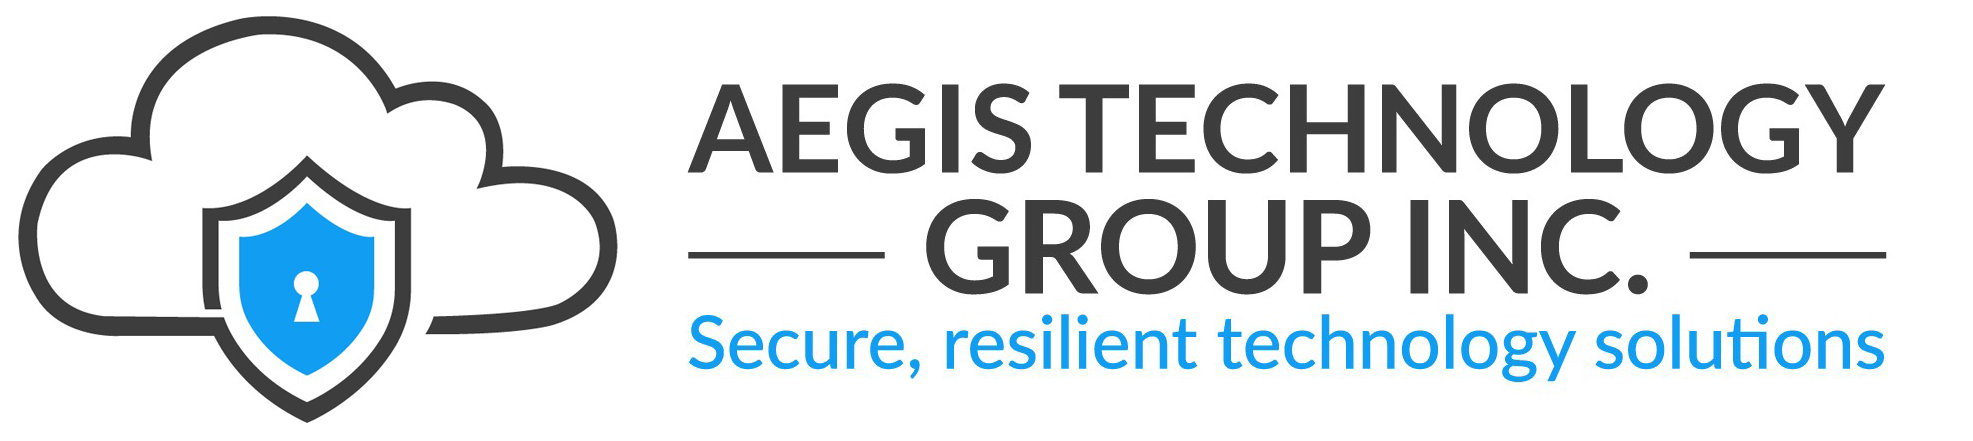 Aegis Technology Group